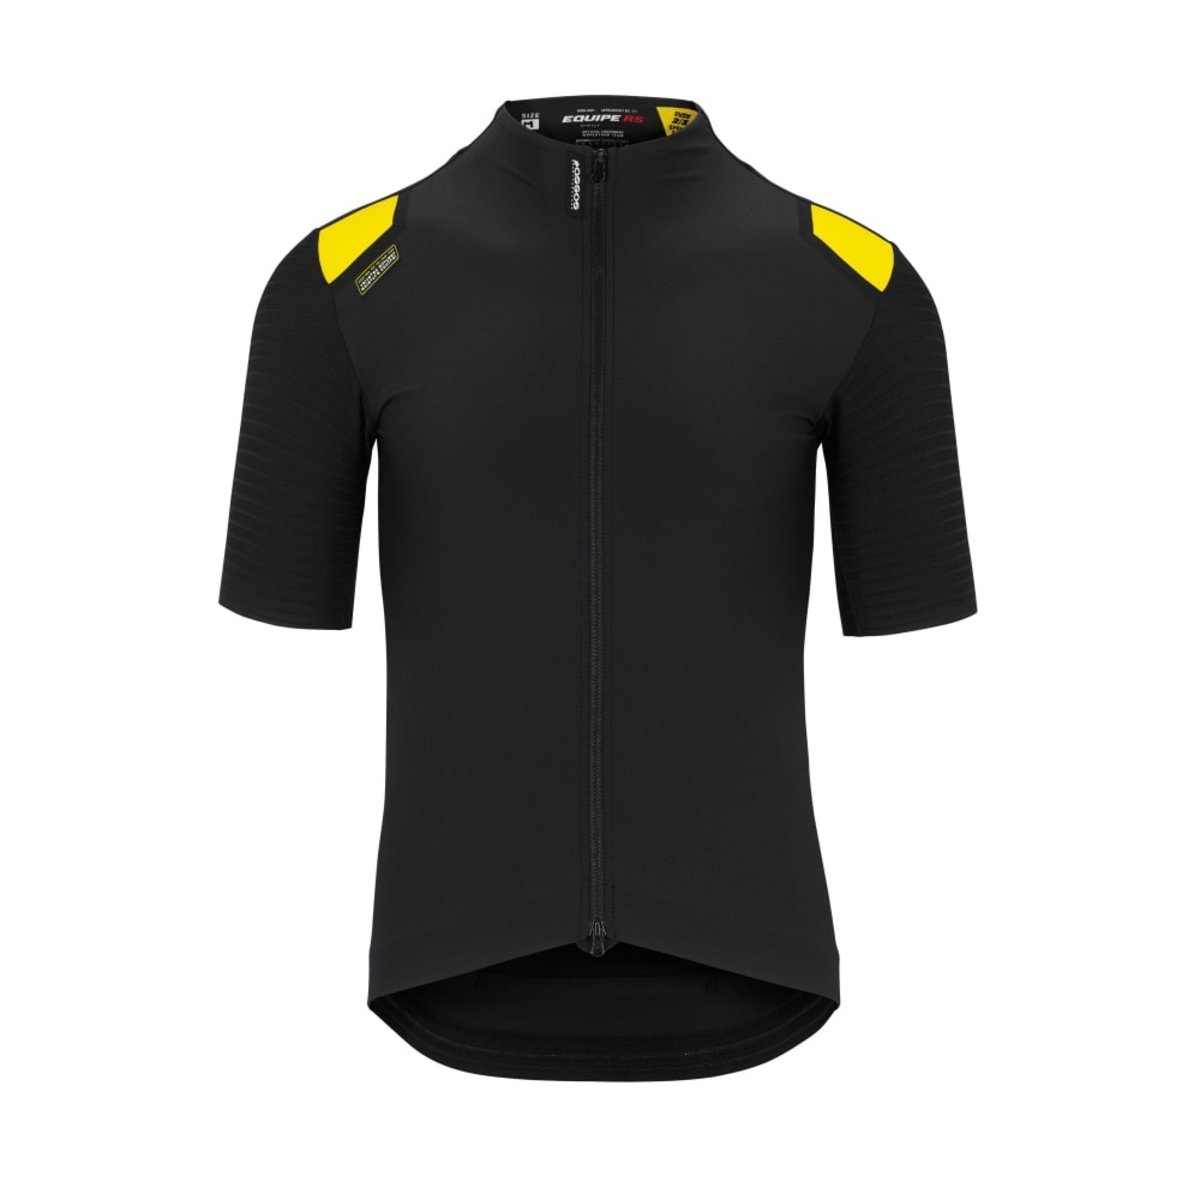 Джерси ASSOS Equipe RS Spring Fall Aero SS Jersey Black Series, кор. рукав, мужское, черное с желтым, XL фото 1